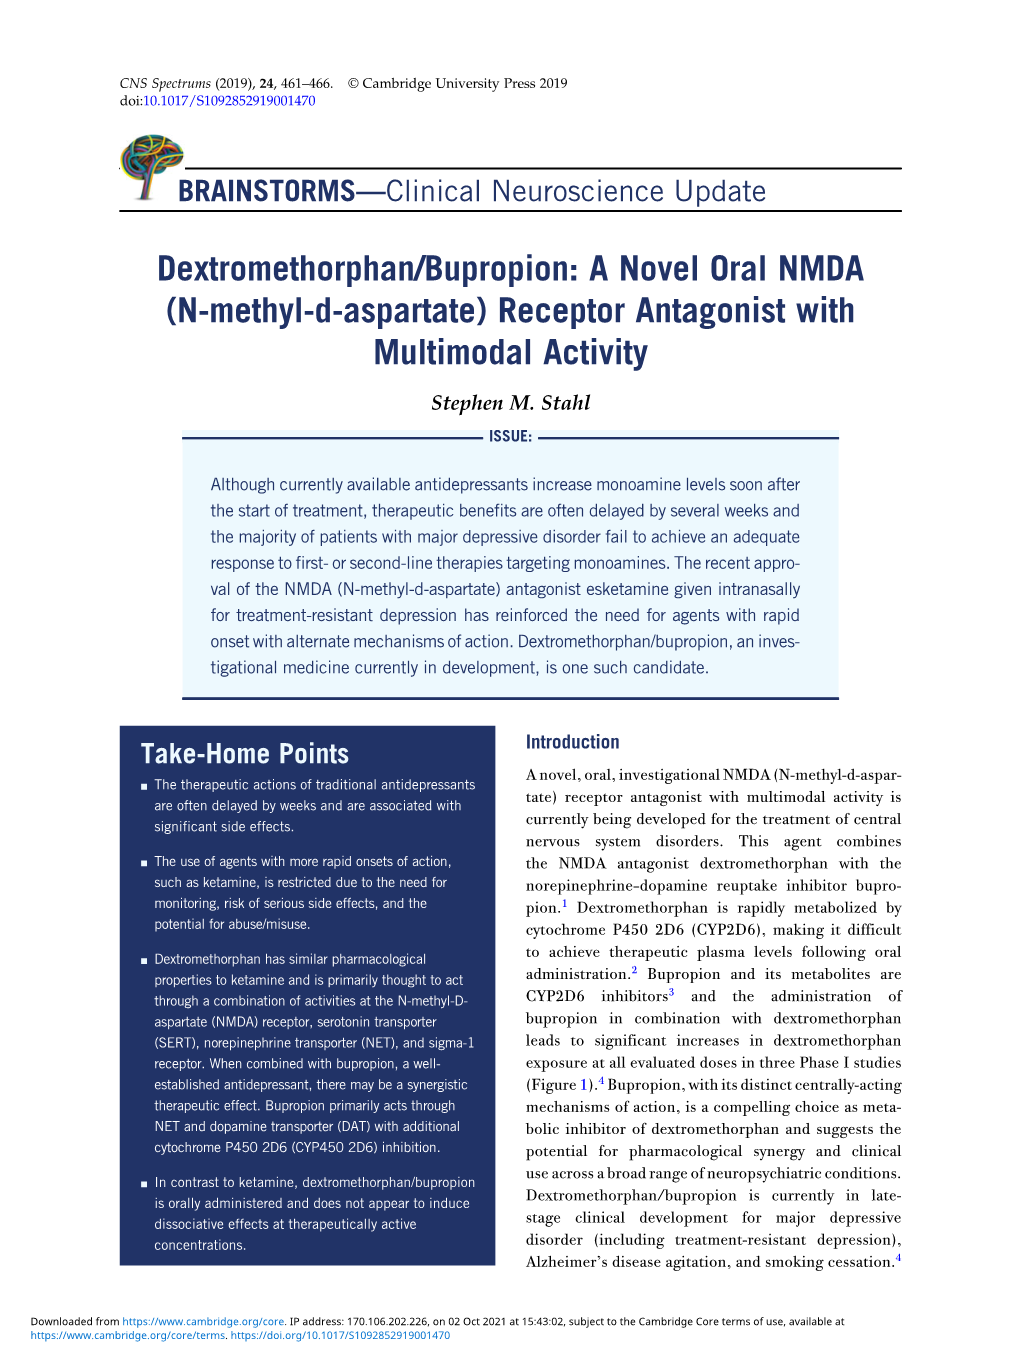 Dextromethorphan/Bupropion: a Novel Oral NMDA (N-Methyl-D-Aspartate) Receptor Antagonist with Multimodal Activity Stephen M